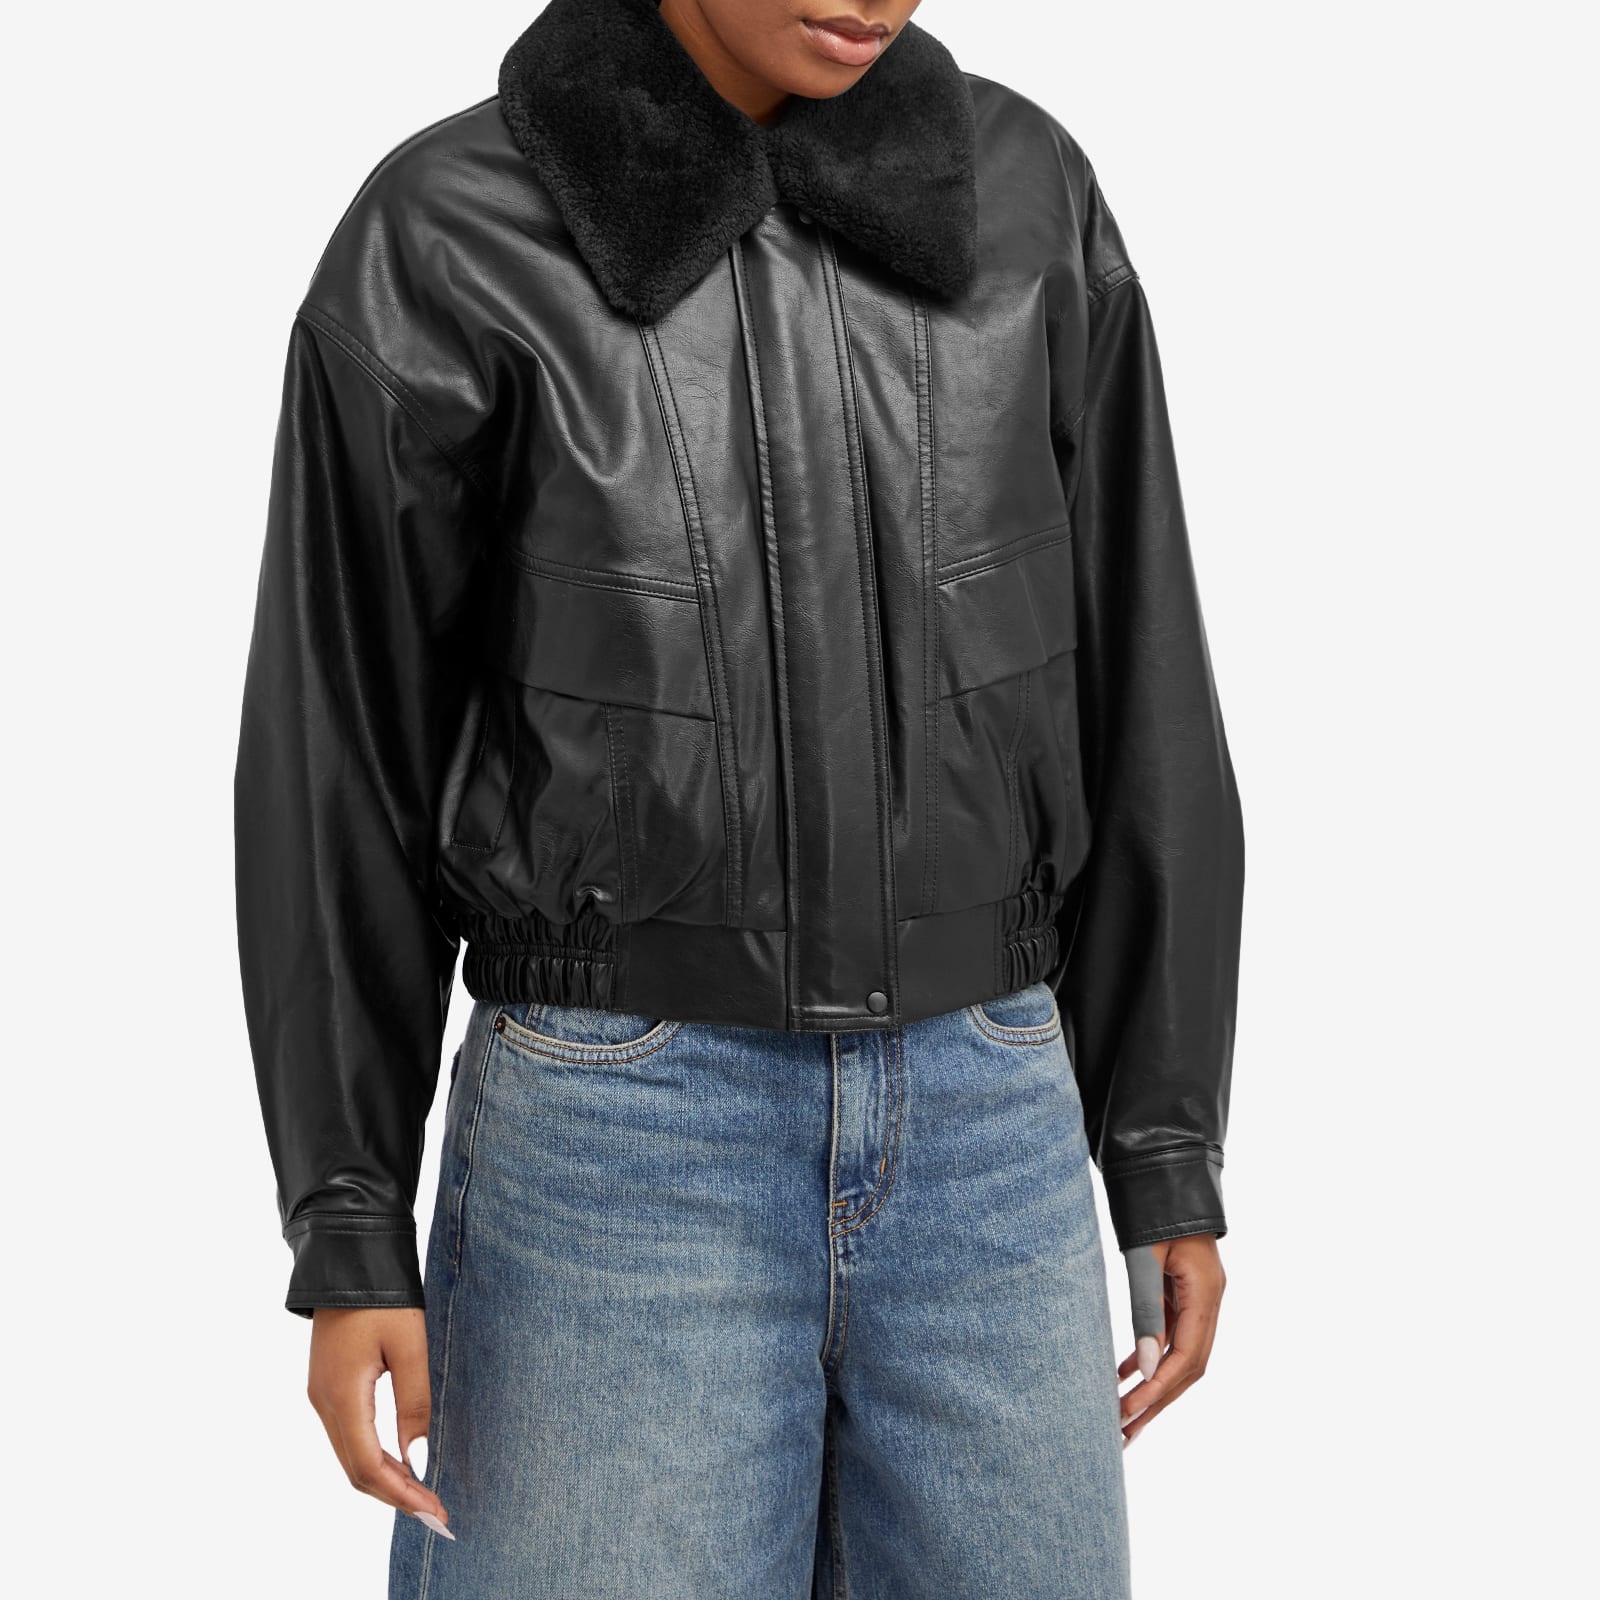 Low Classic Faux Leather Short Jacket - 2